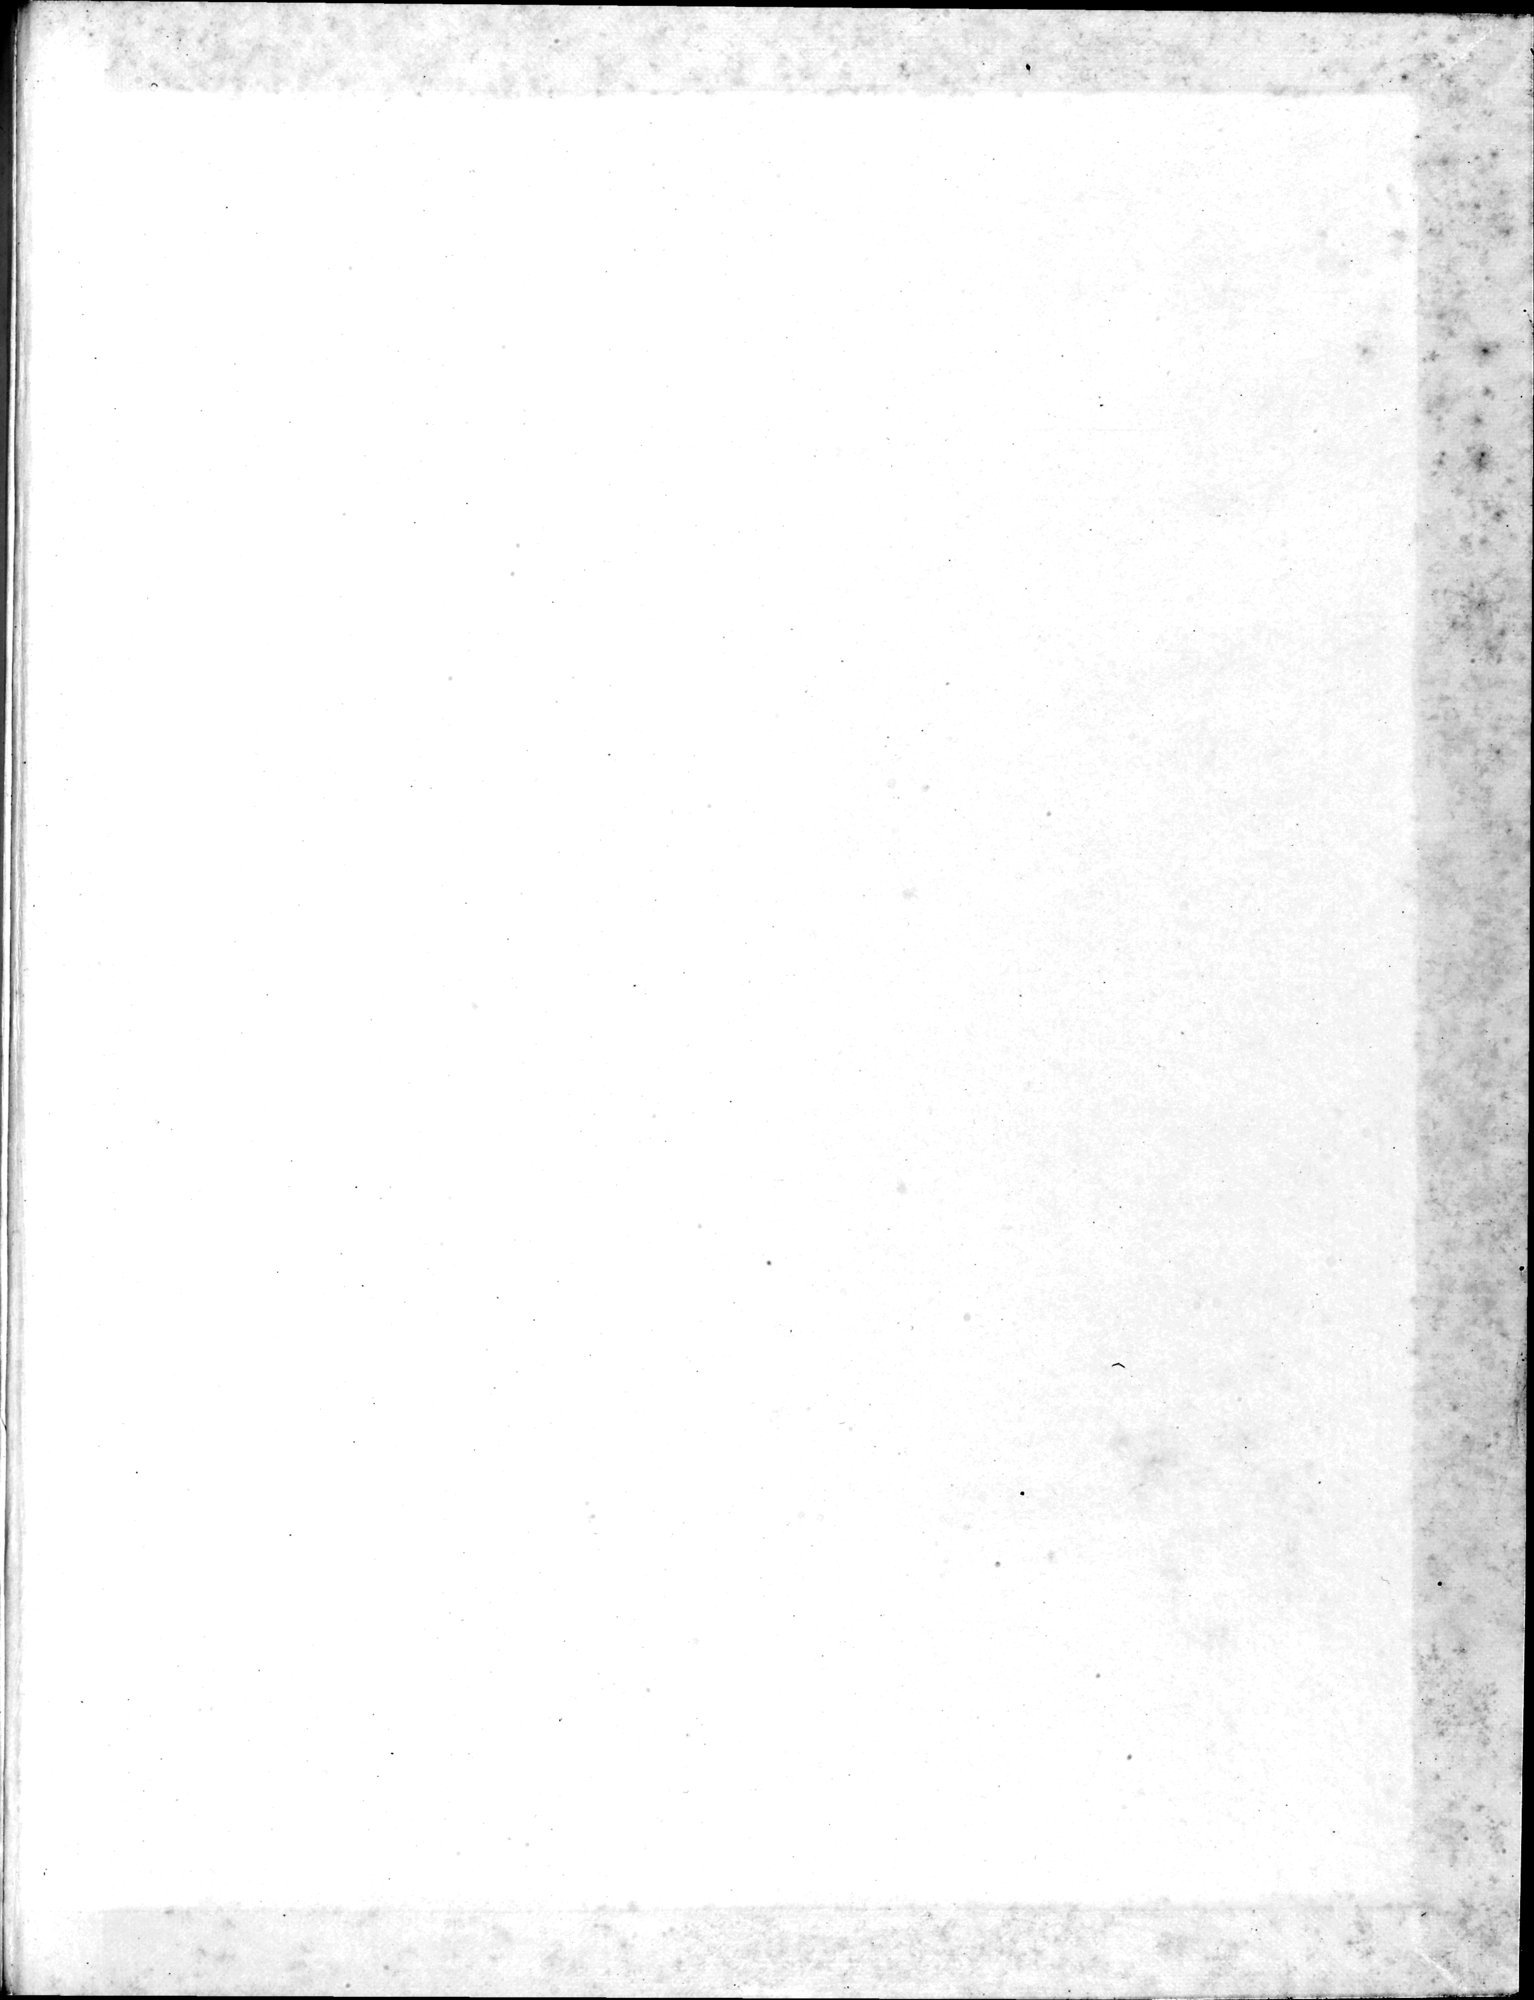 Mongoliia i Kam : vol.4 / Page 69 (Grayscale High Resolution Image)